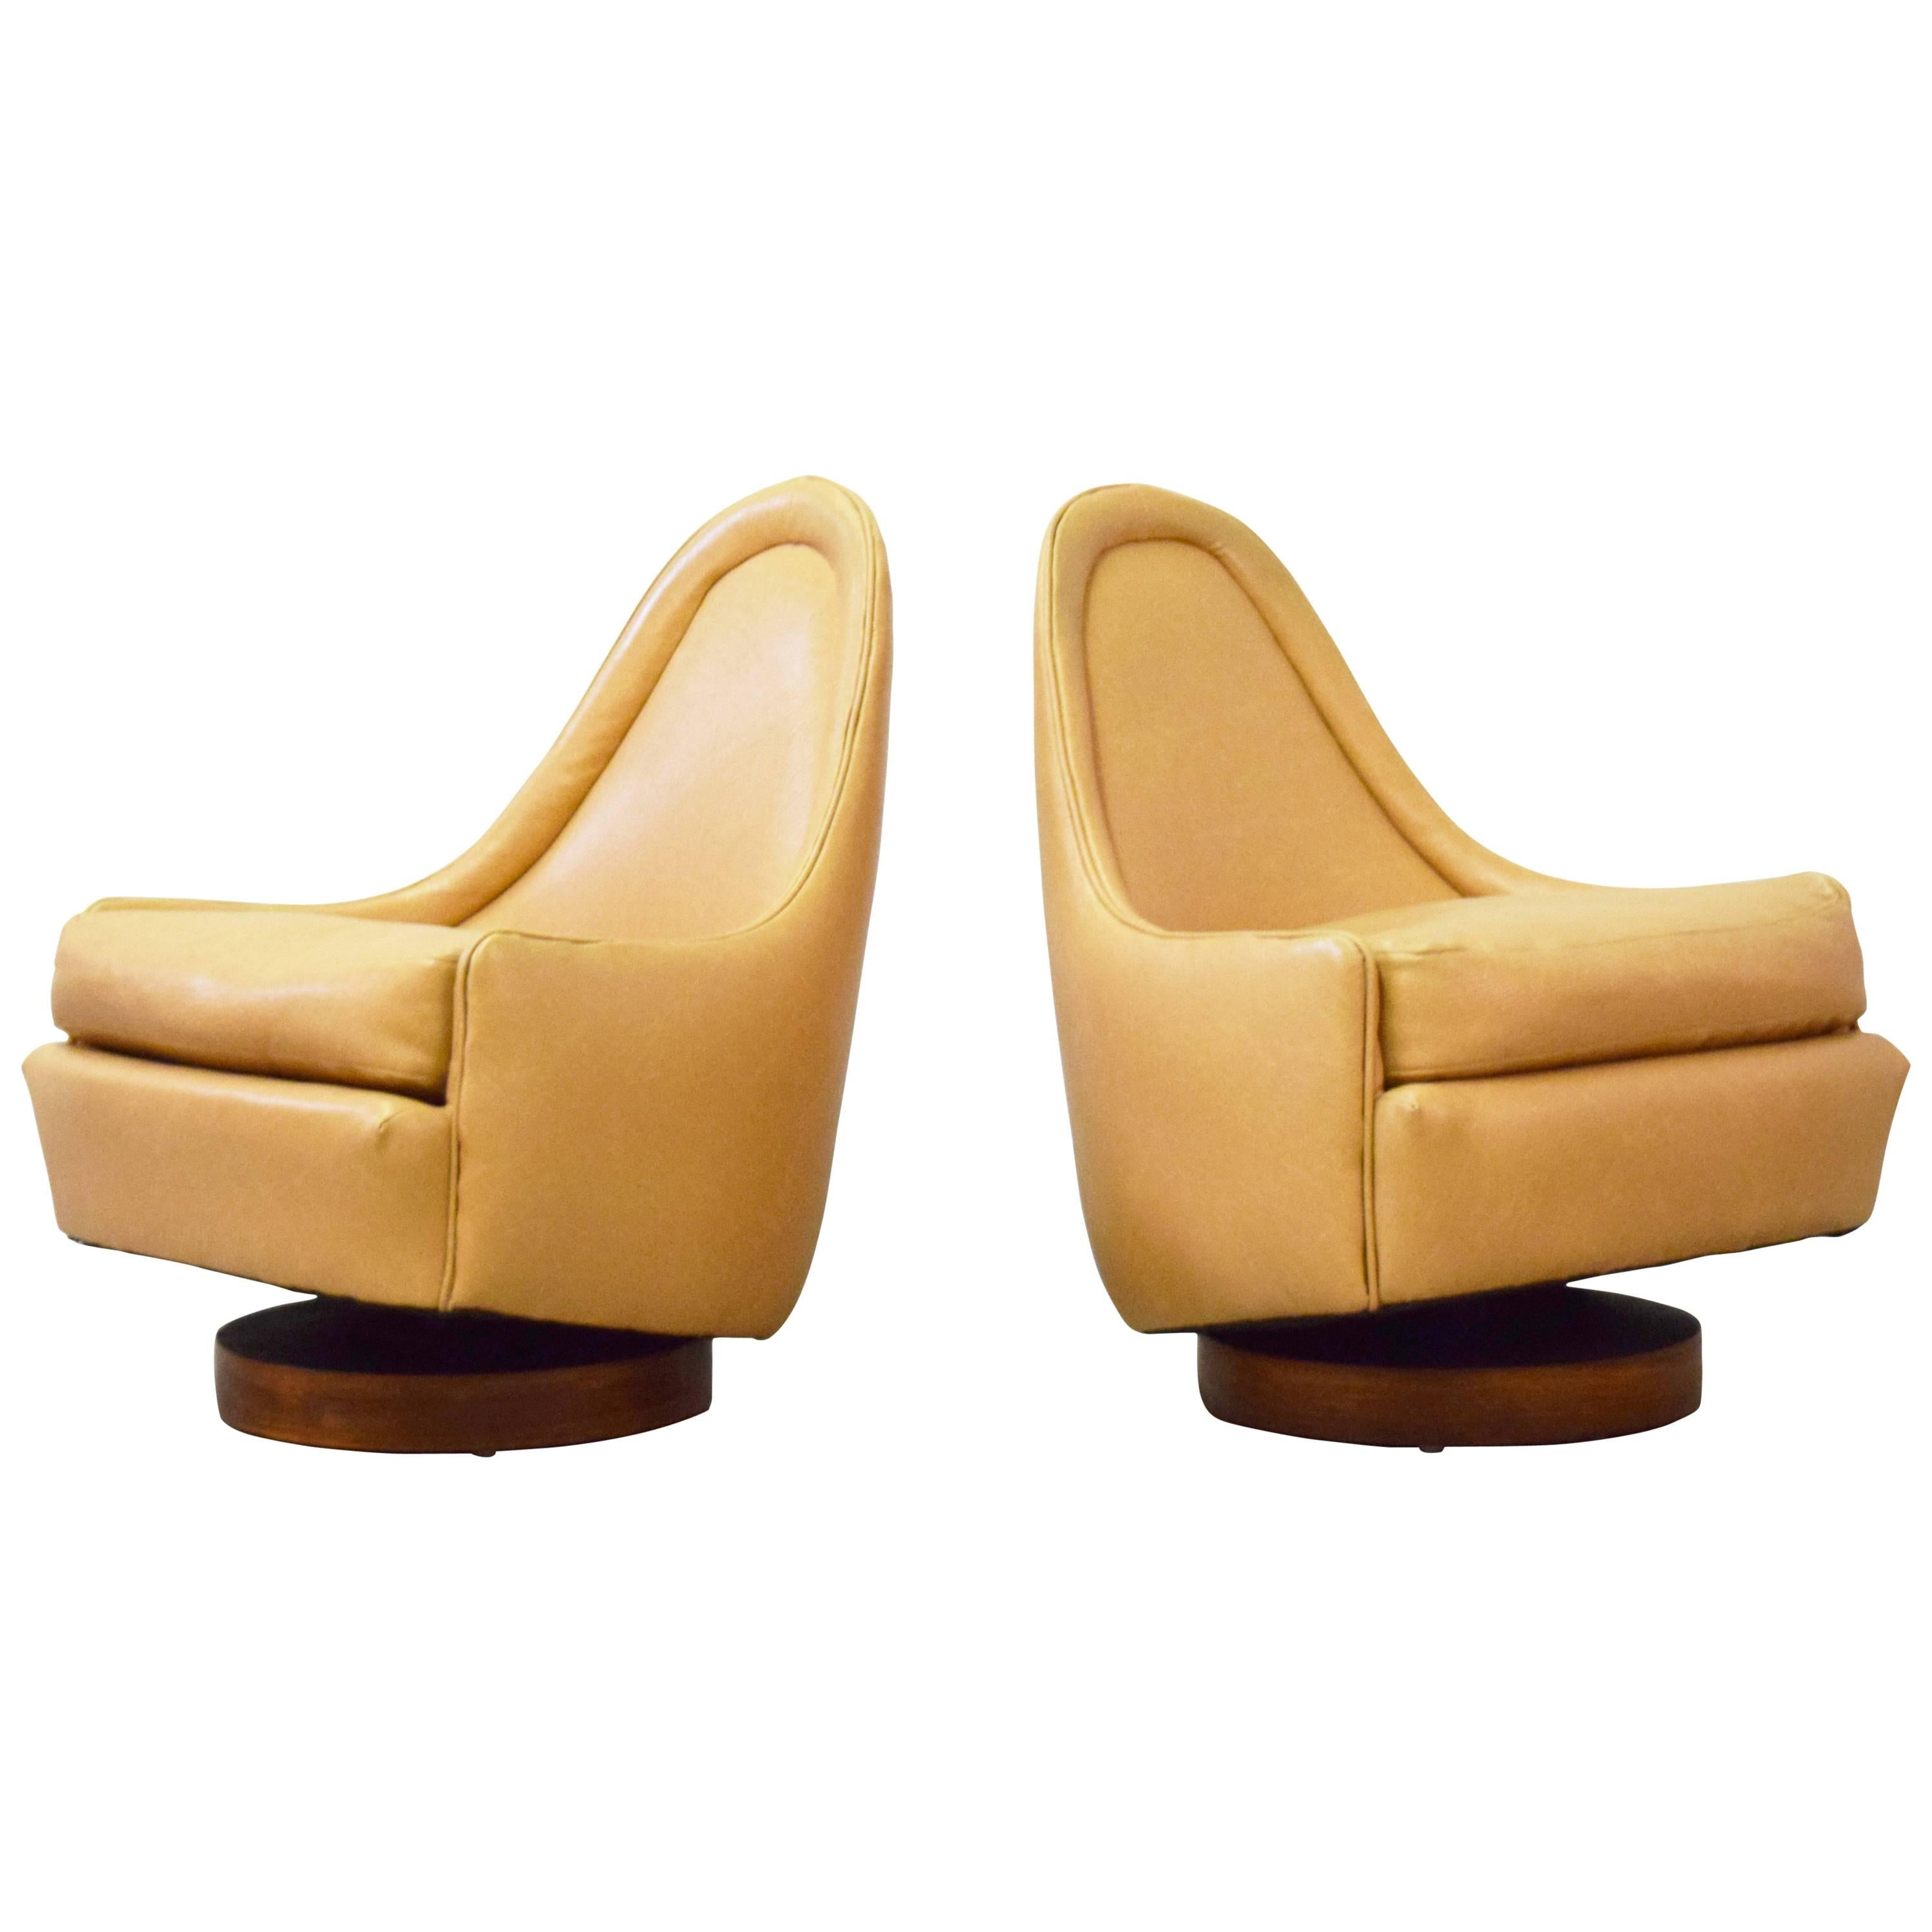 Pair of Petite Swivel Slipper Lounge Chairs by Milo Baughman